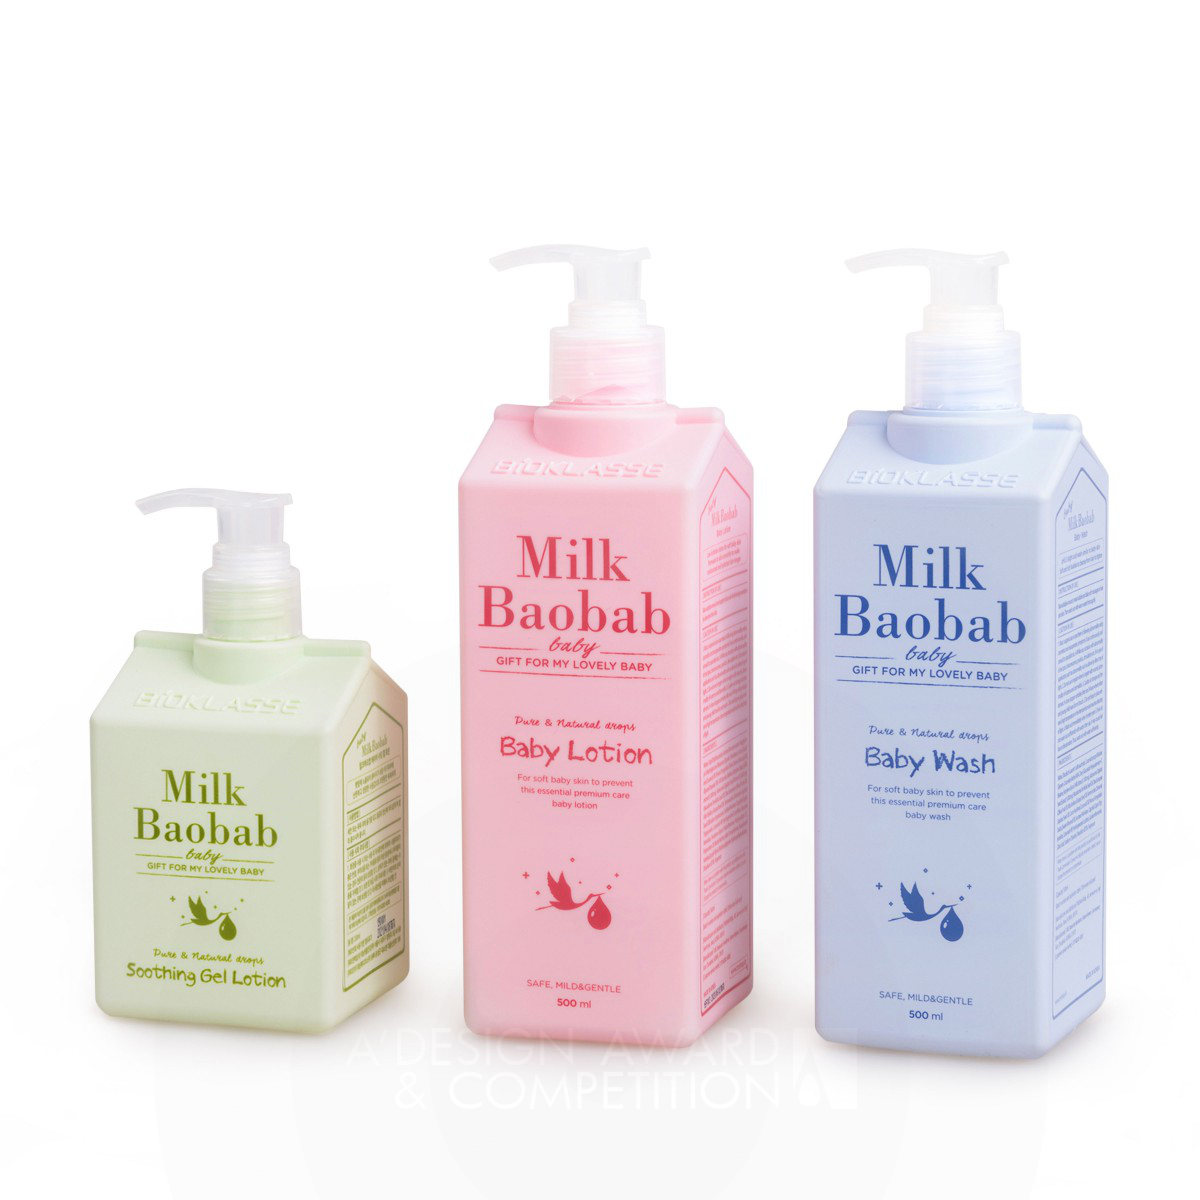 Milk Baobab Baby Skin Care Packaging by Hyein Kim